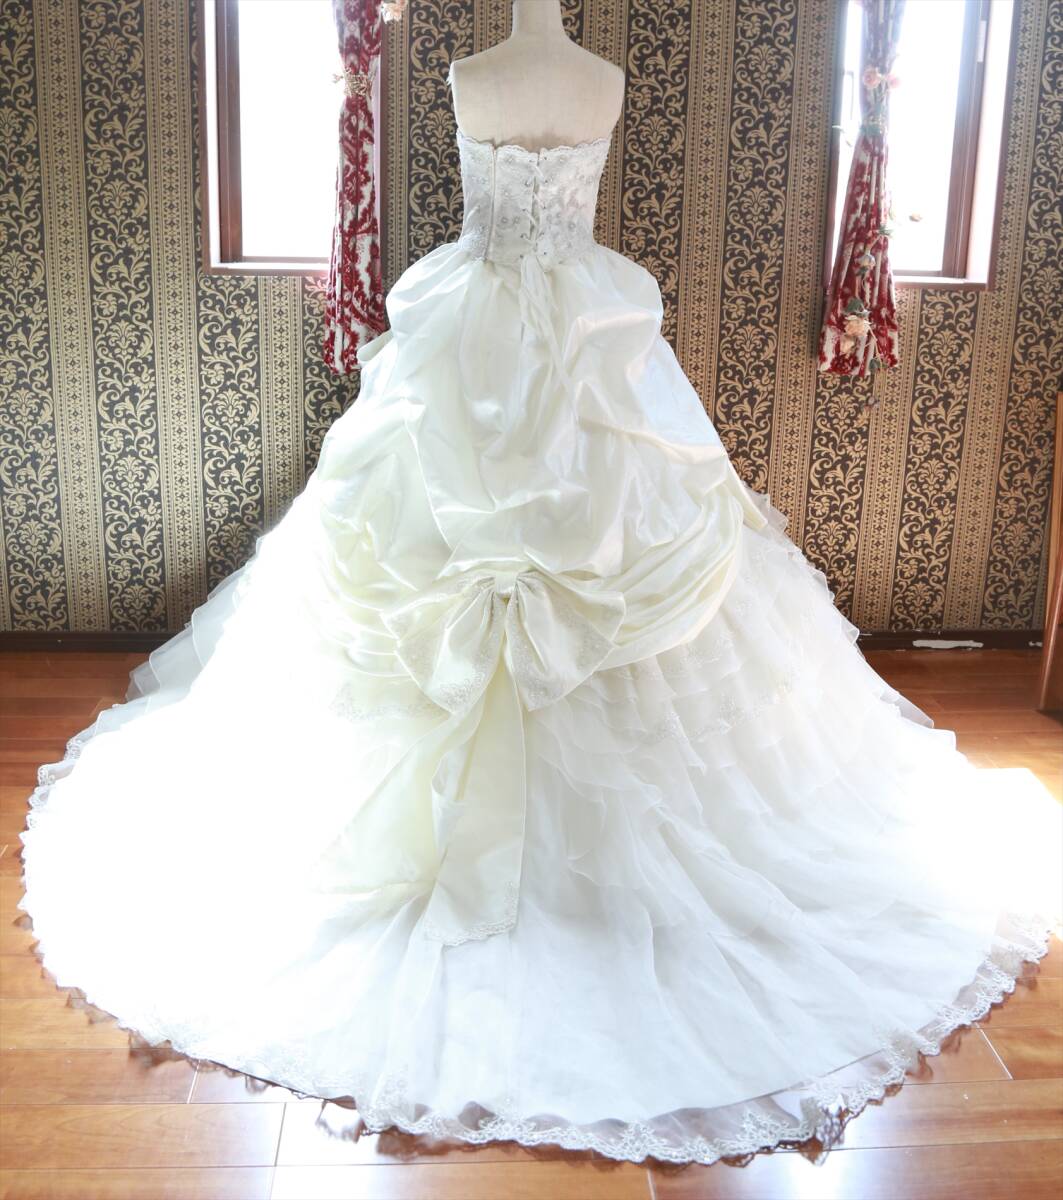 INIS high class wedding dress 11 number 13 number 15 number L~3L size large size compilation up adjustment possibility 